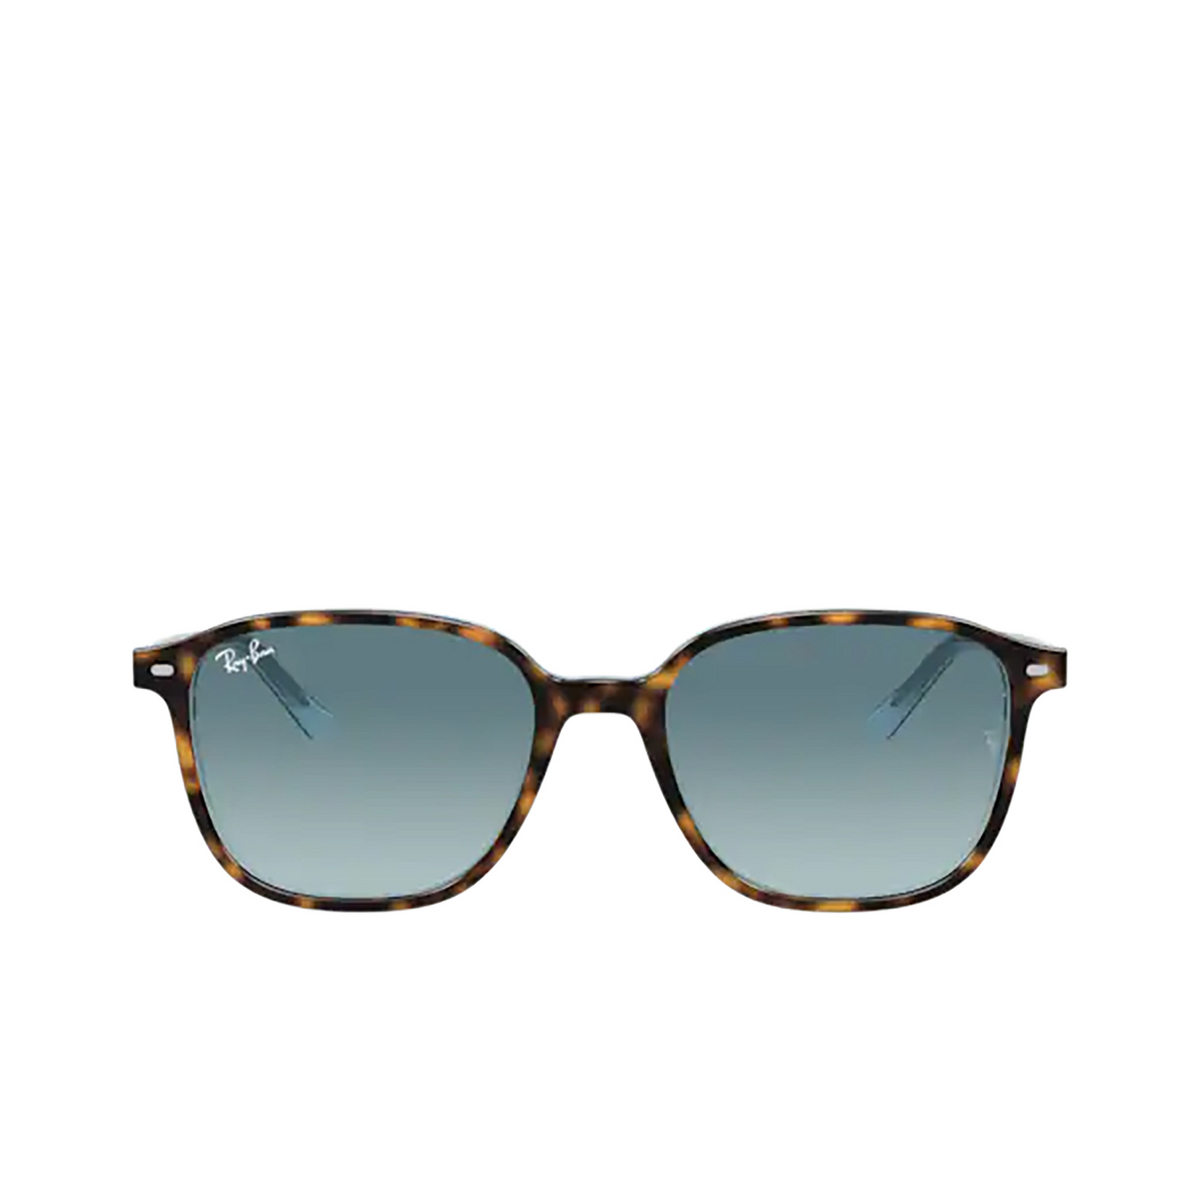 Ray-Ban LEONARD Sunglasses 13163M Havana On Light Blue - front view